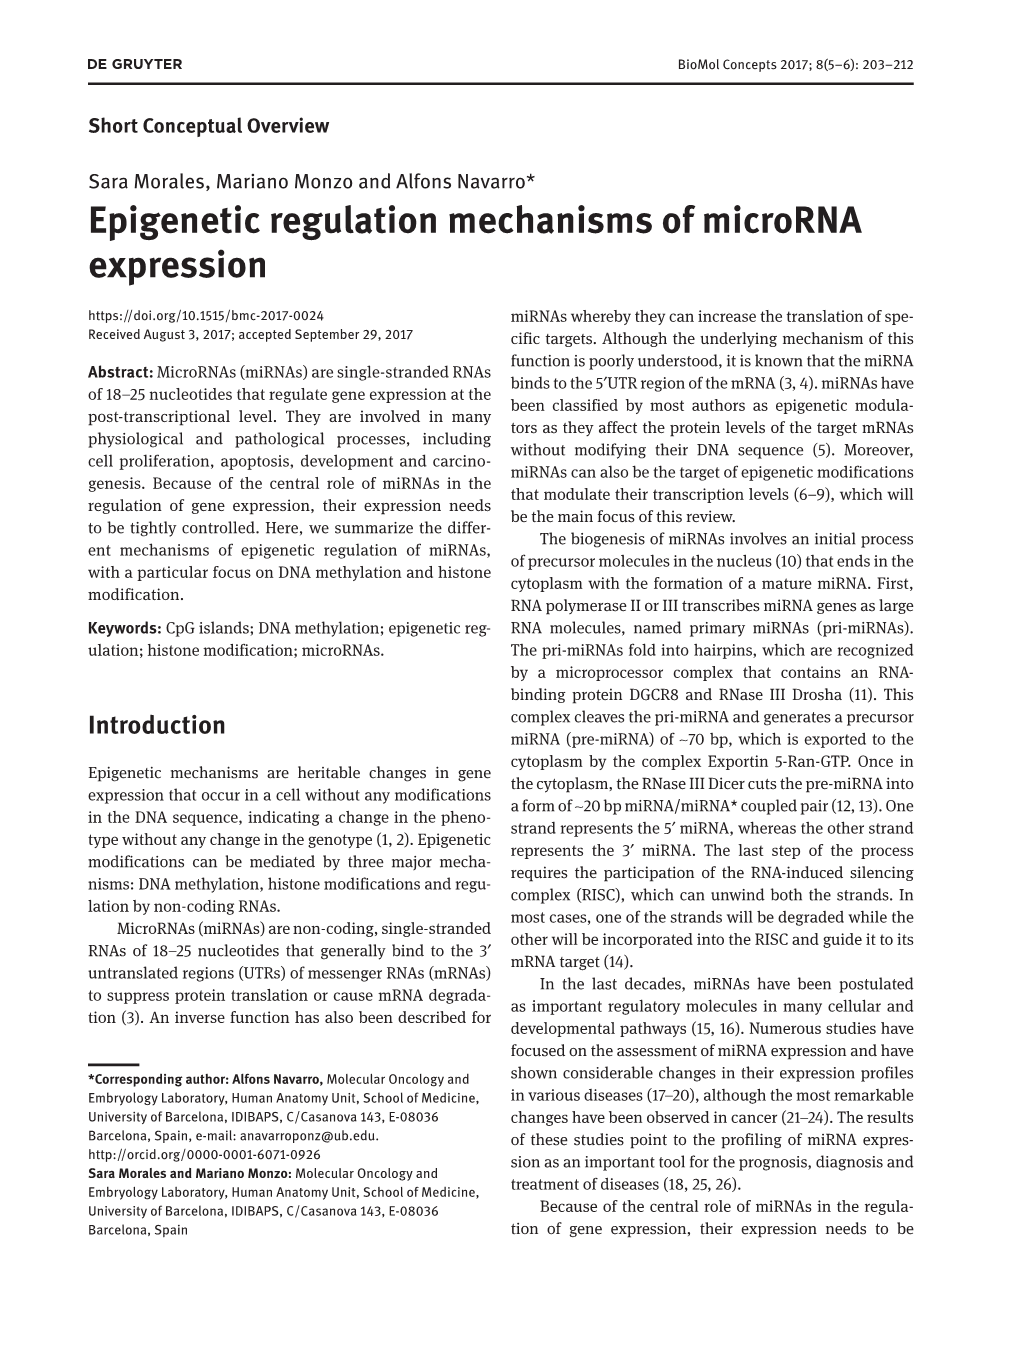 Epigenetic Regulation Mechanisms of Microrna Expression